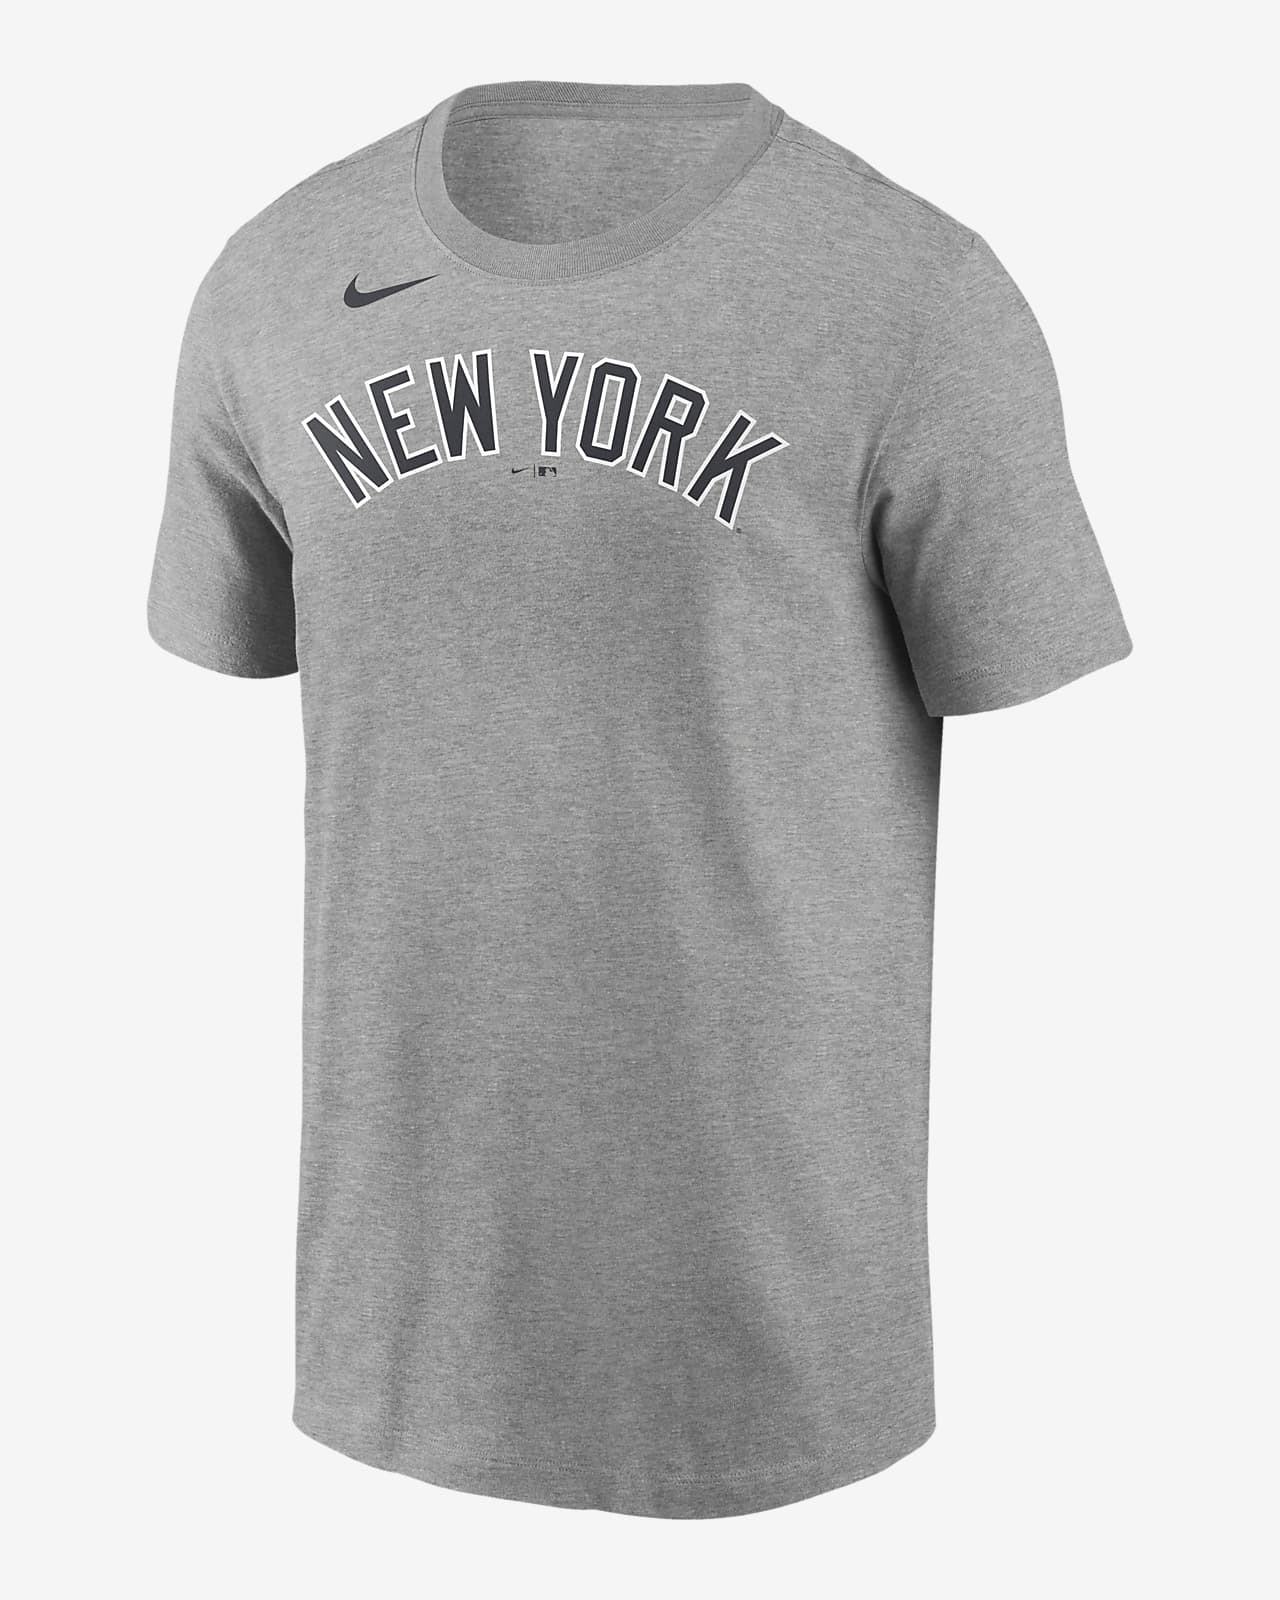 new york yankees t shirts